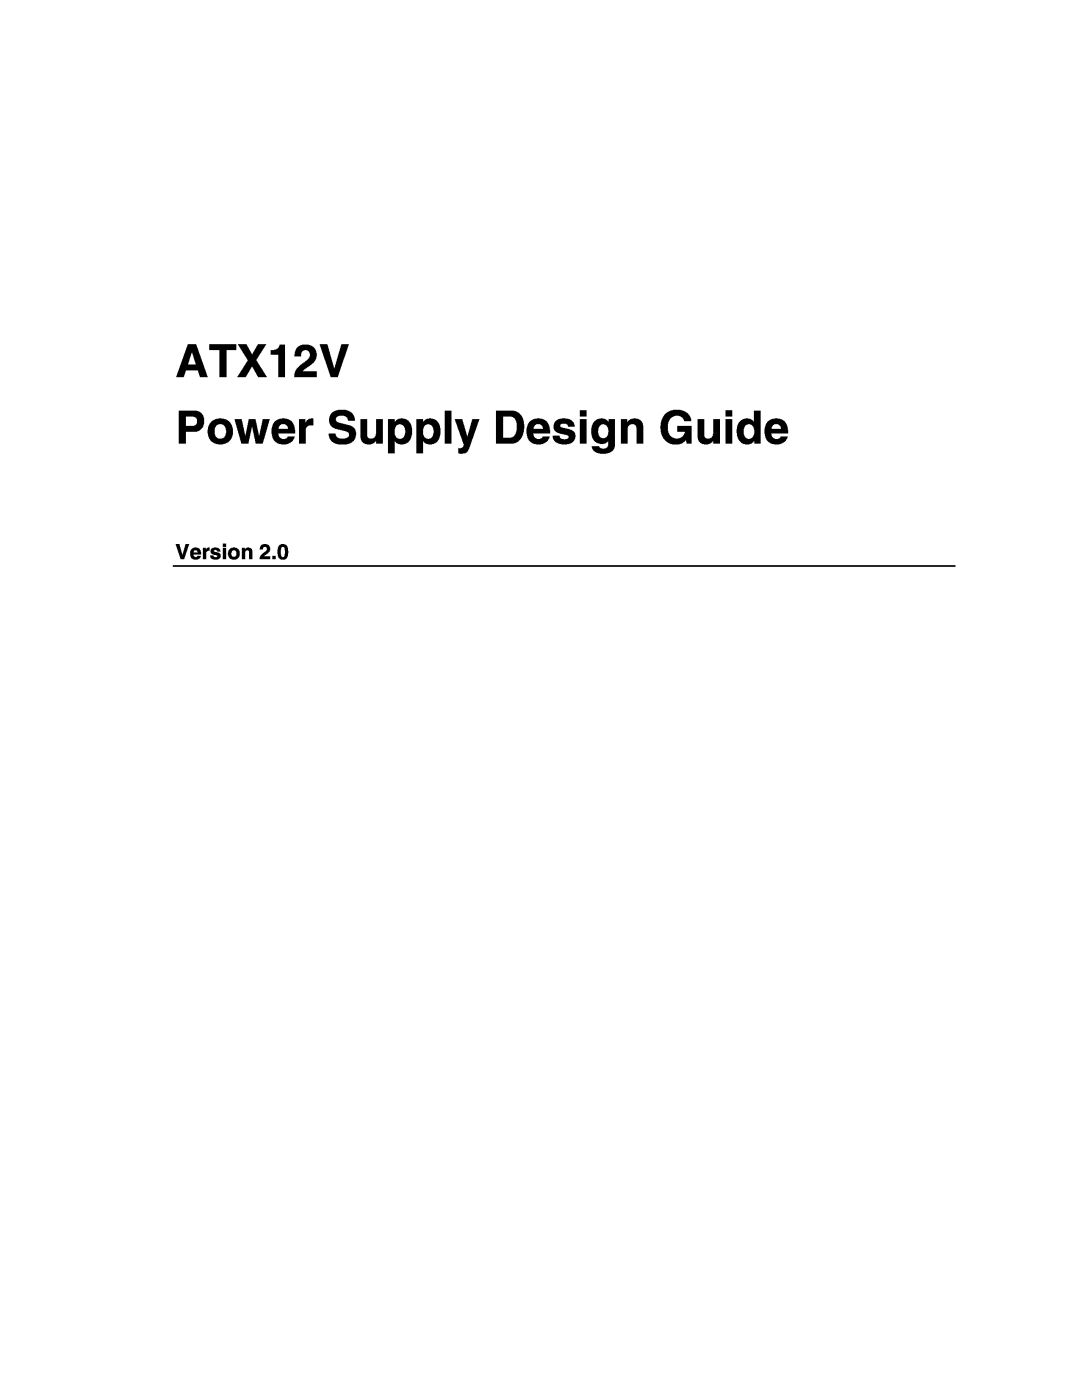 Intel manual ATX12V Power Supply Design Guide, Version 